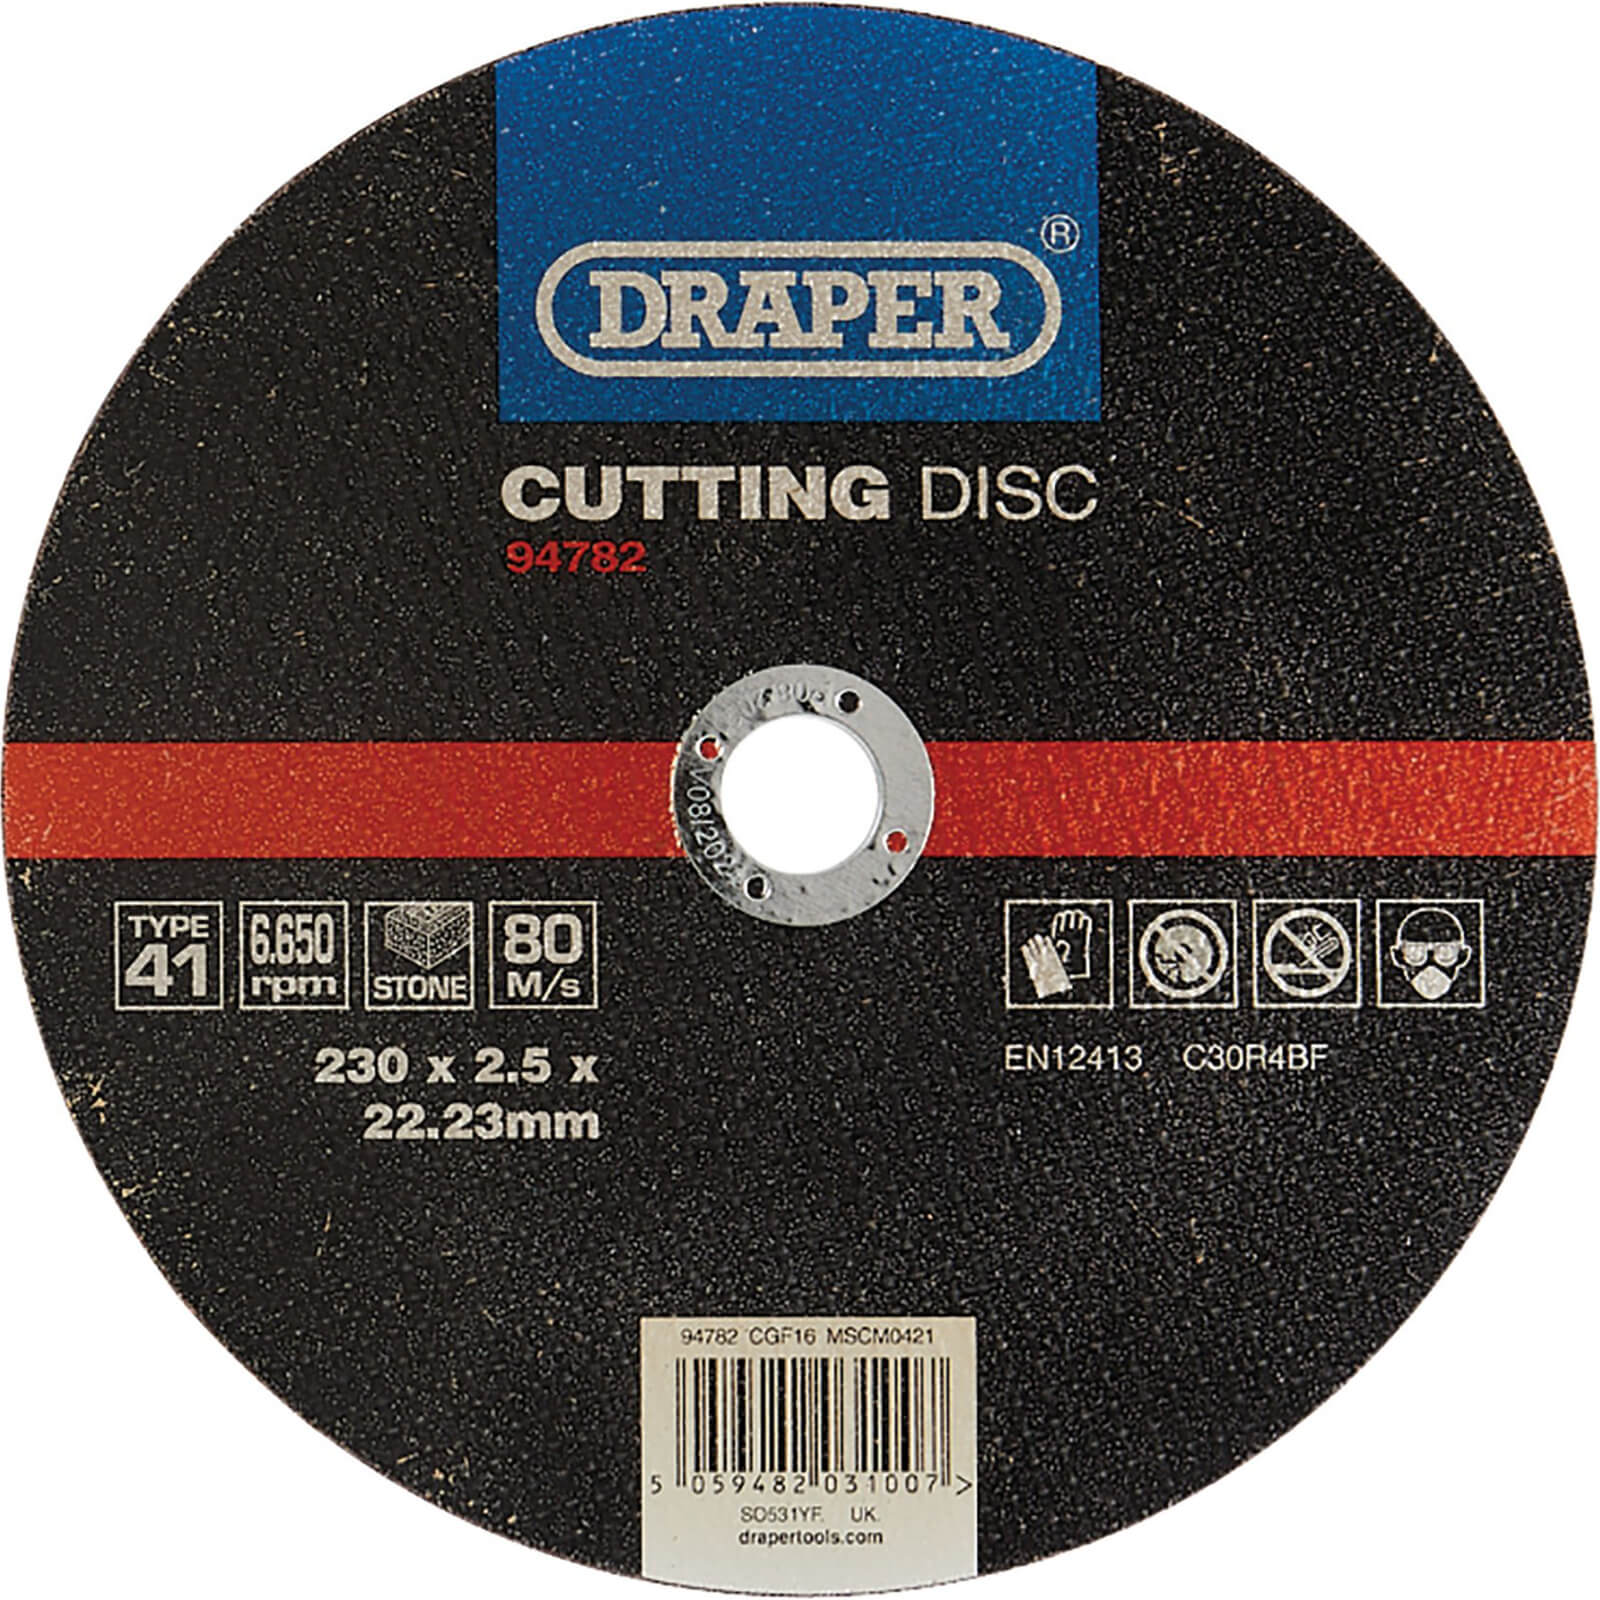 Image of Draper Flat Stone Cutting Disc 230mm 2.5mm 22mm